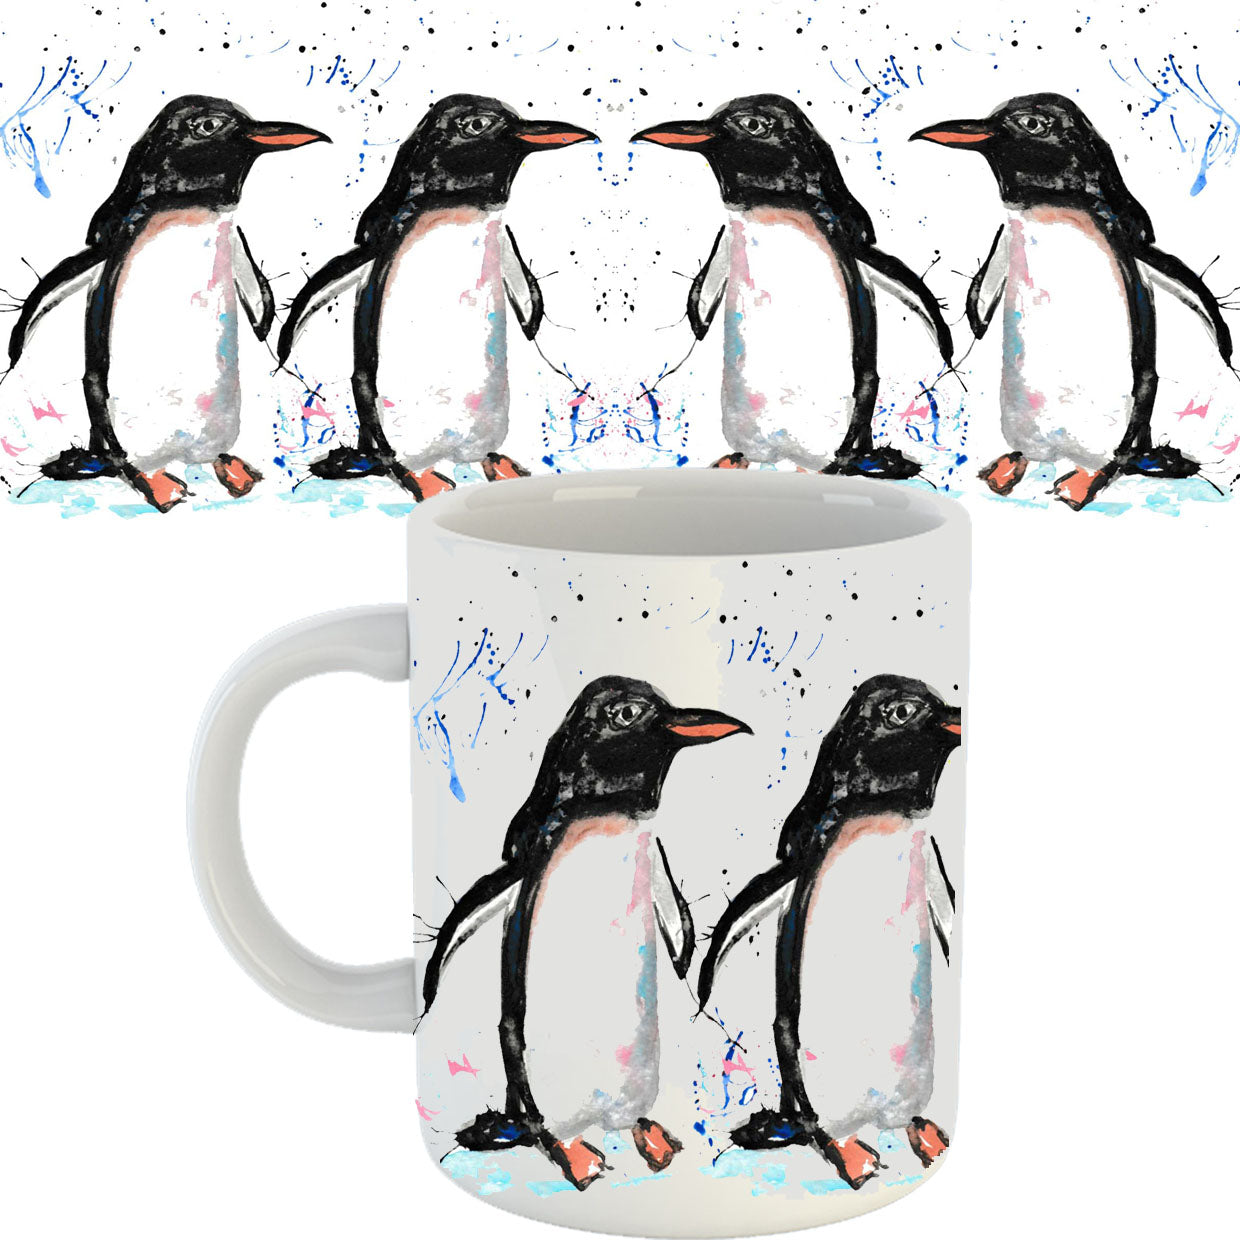 Penguin mug